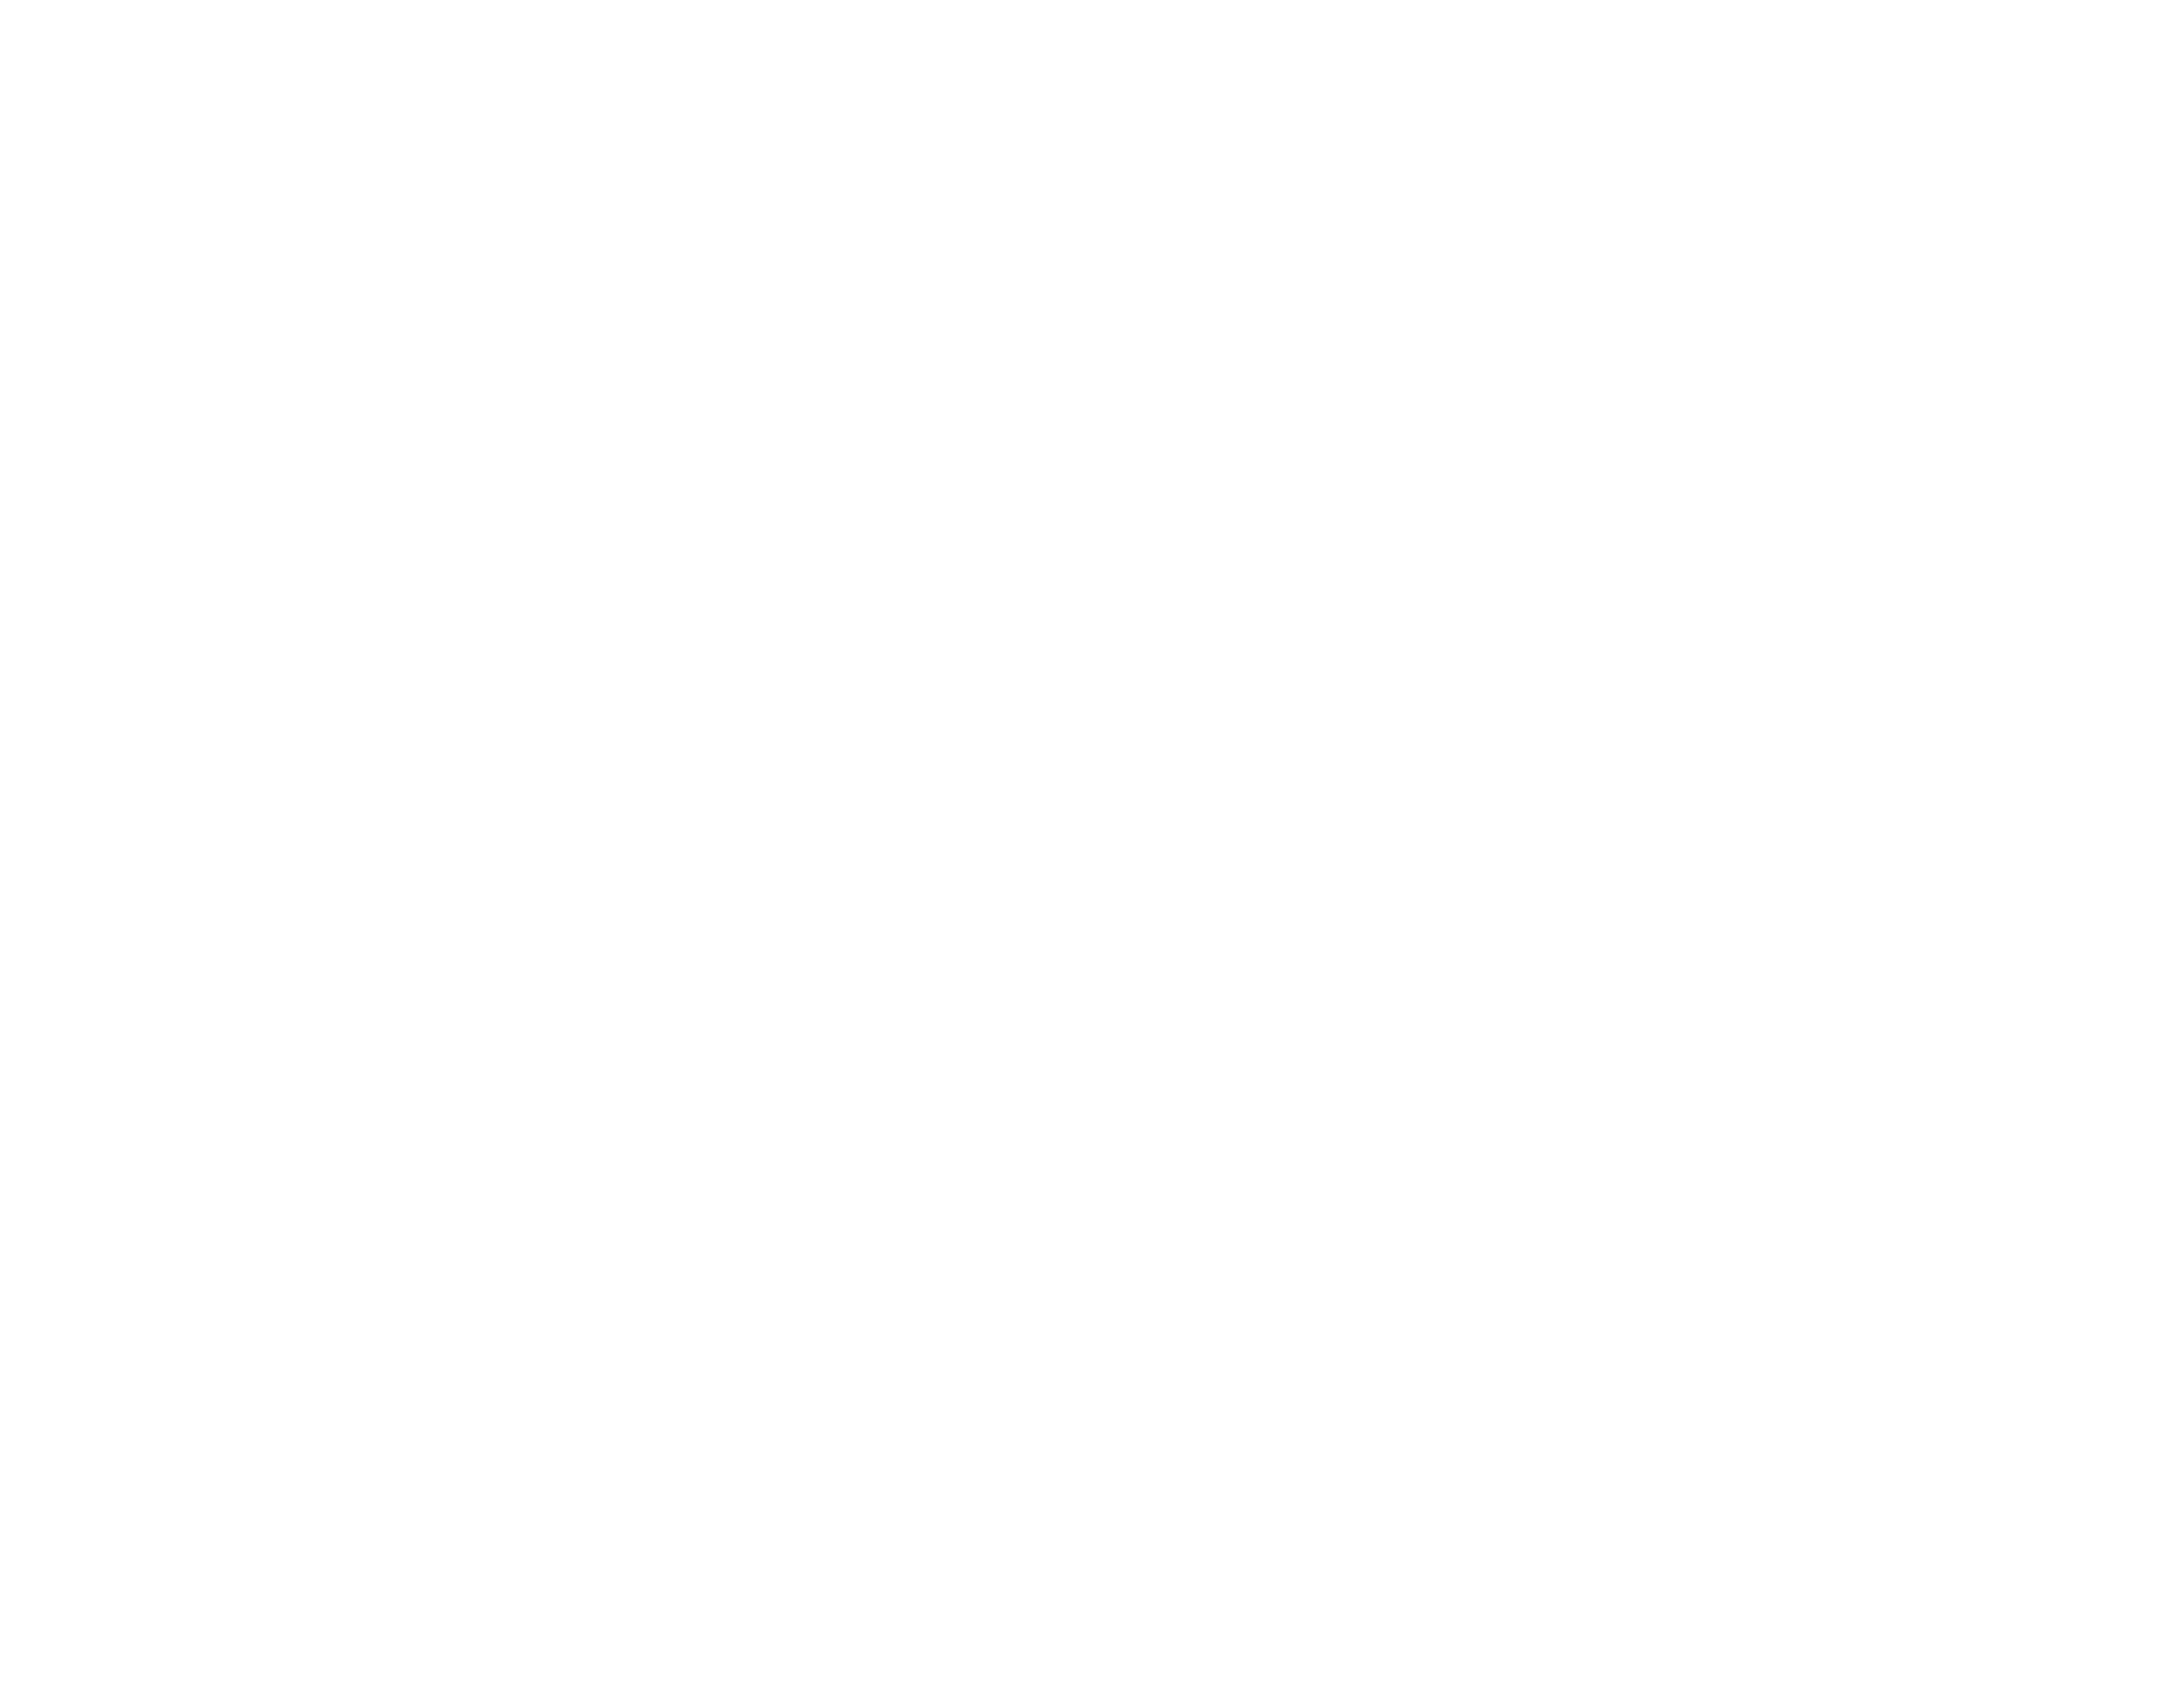 Software Intelligence with Gen Z